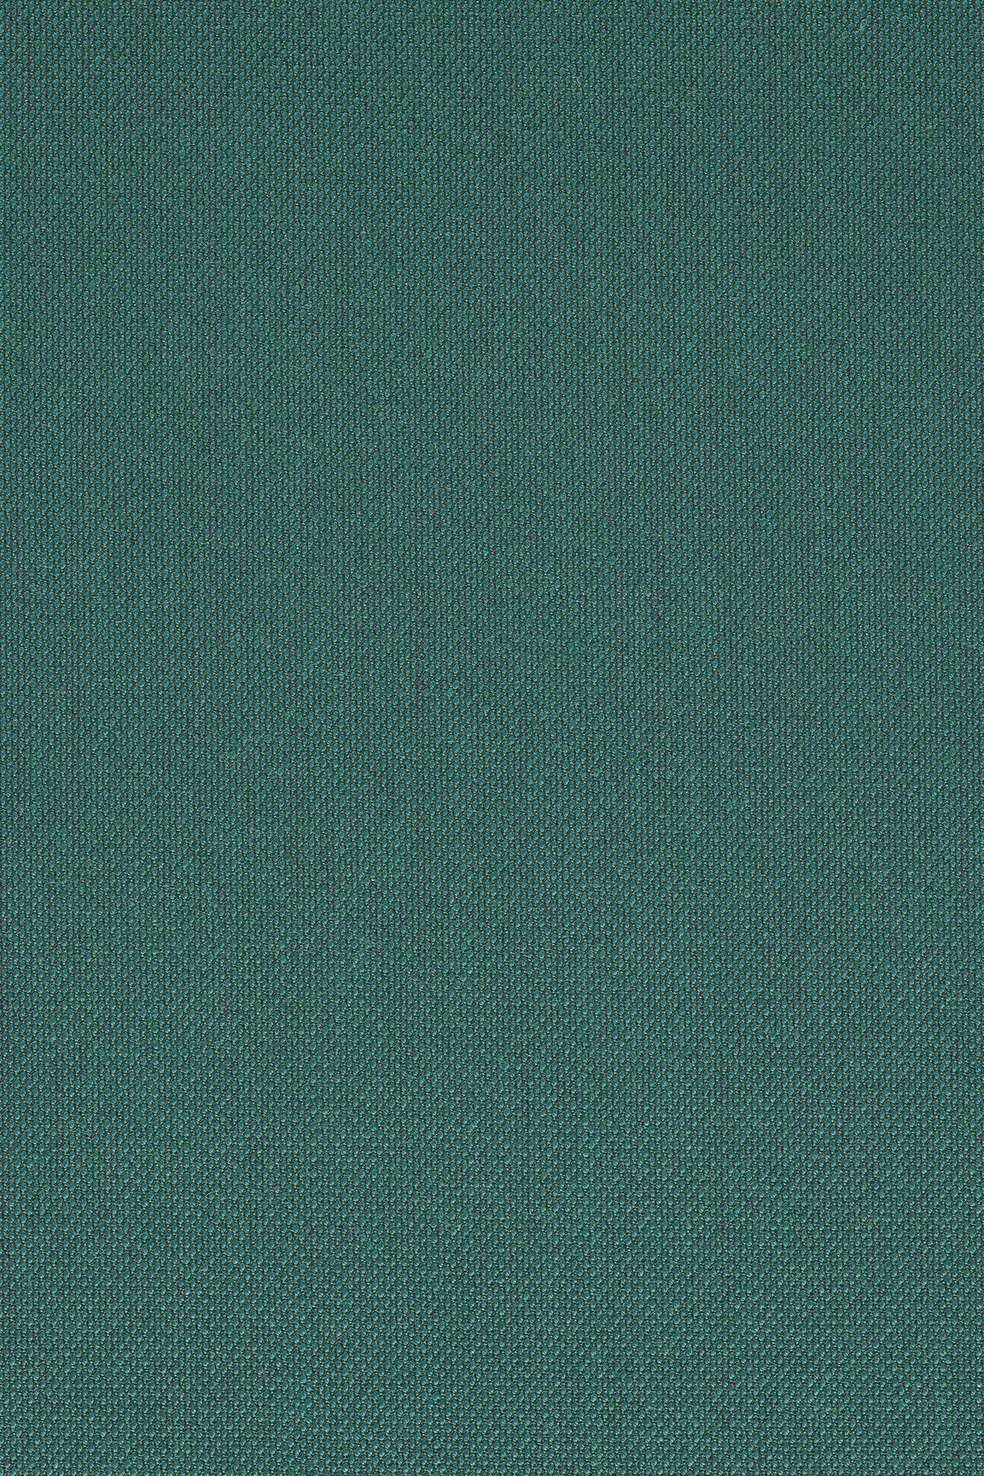 Fabric sample Steelcut Trio 3 green